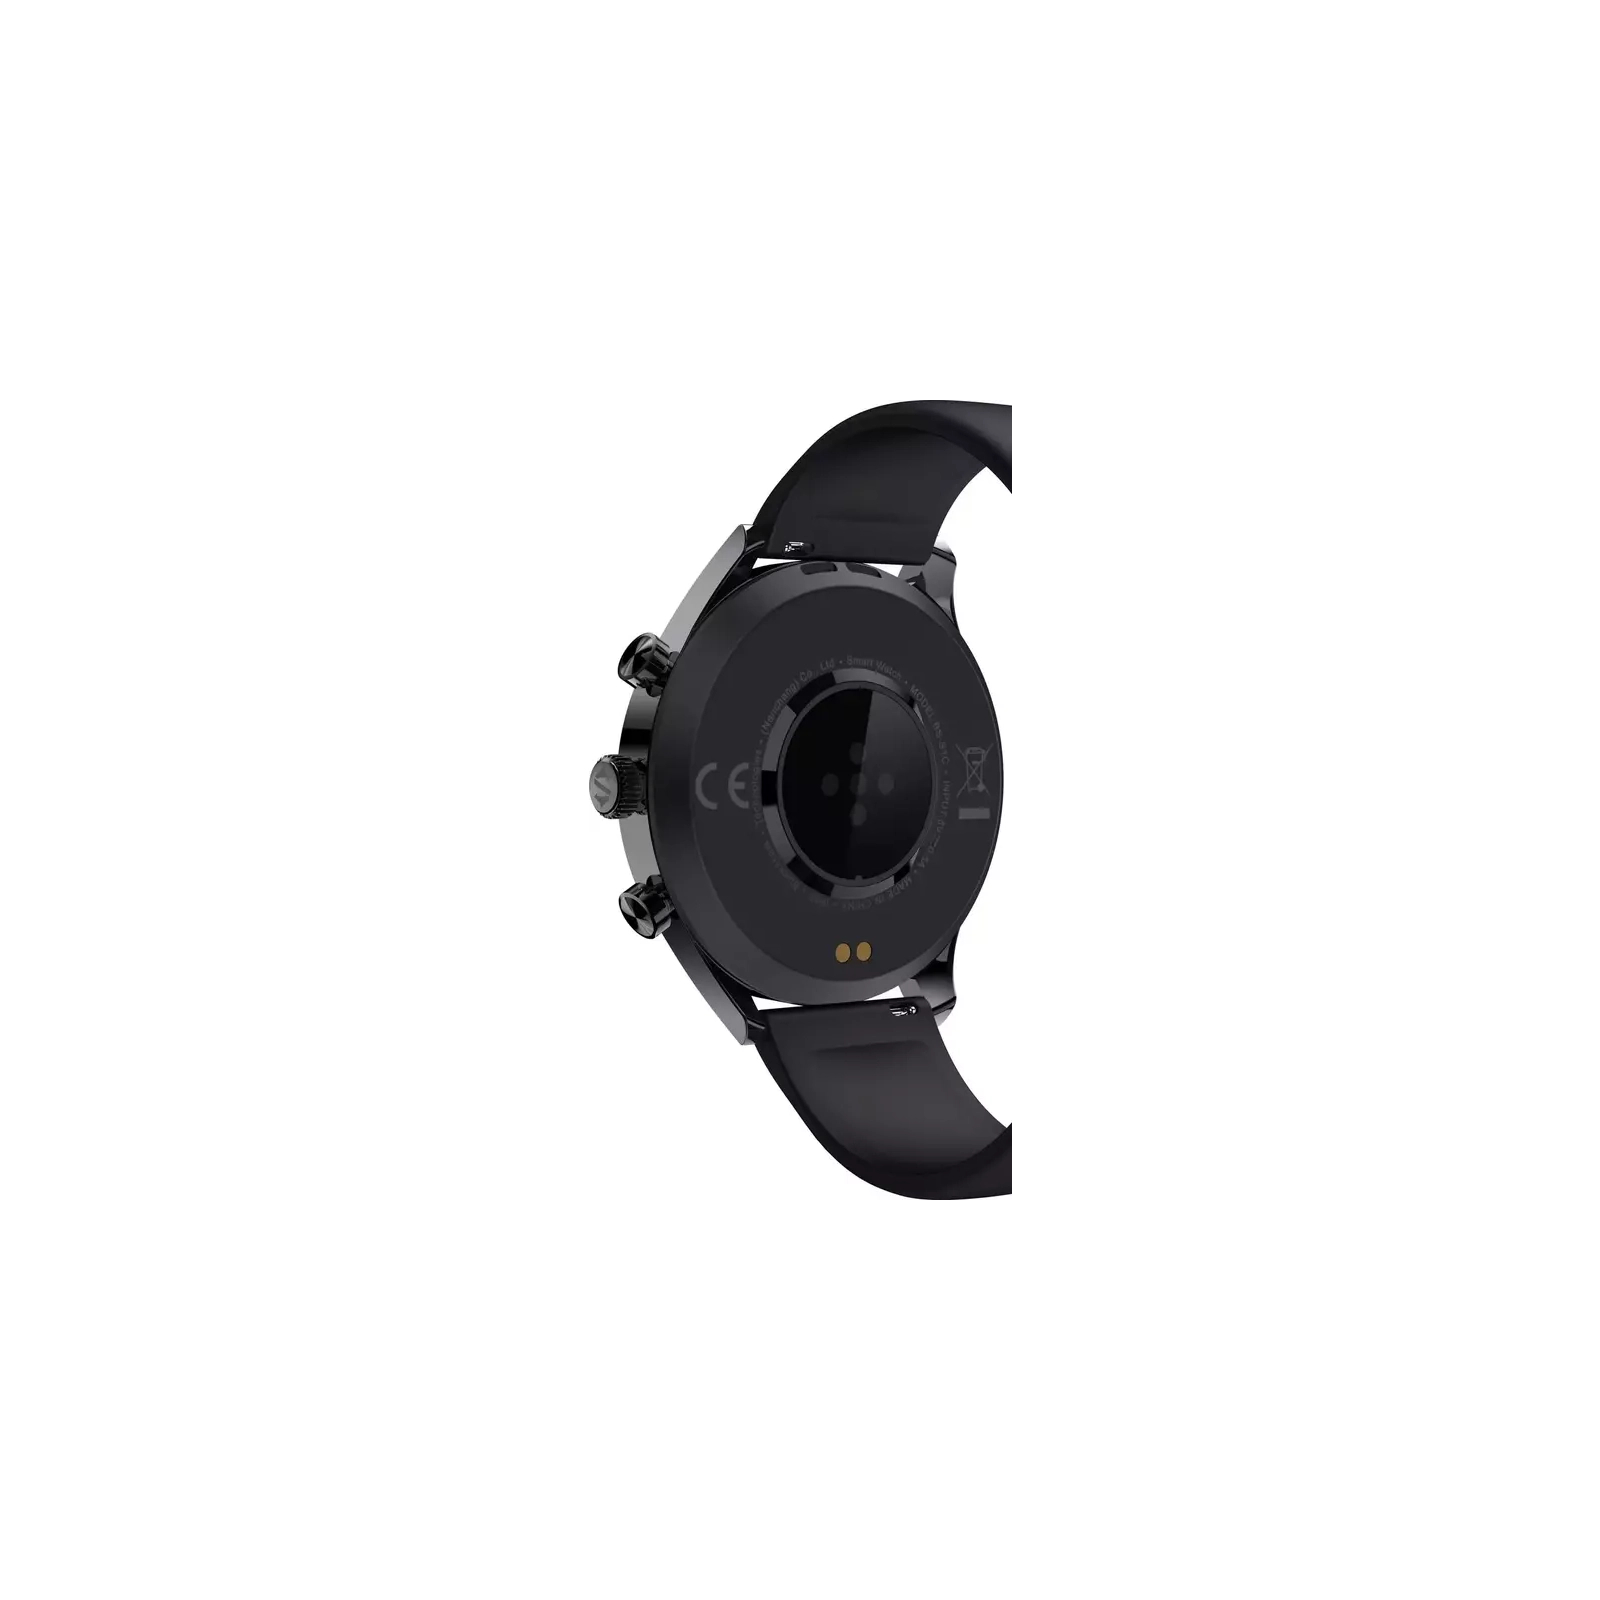 Смарт-годинник Black Shark S1 CLASSIC - Silver зображення 10